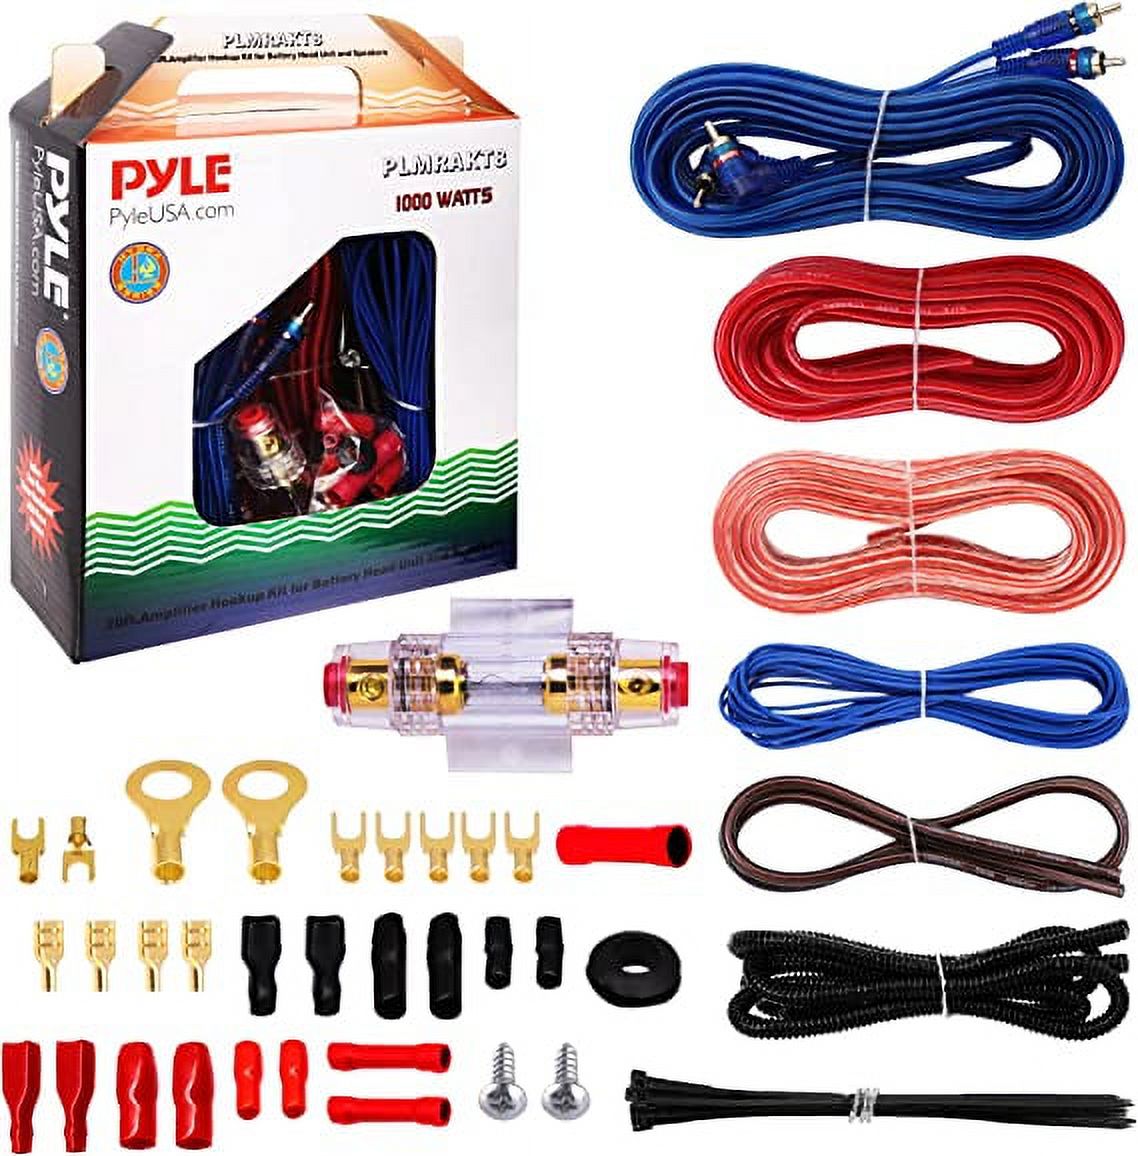 Pyle Car Audio Wiring Kit 20ft 8 Gauge Power Wire 1000-Watt Amplifier Hookup for Battery Head Unit - image 1 of 6